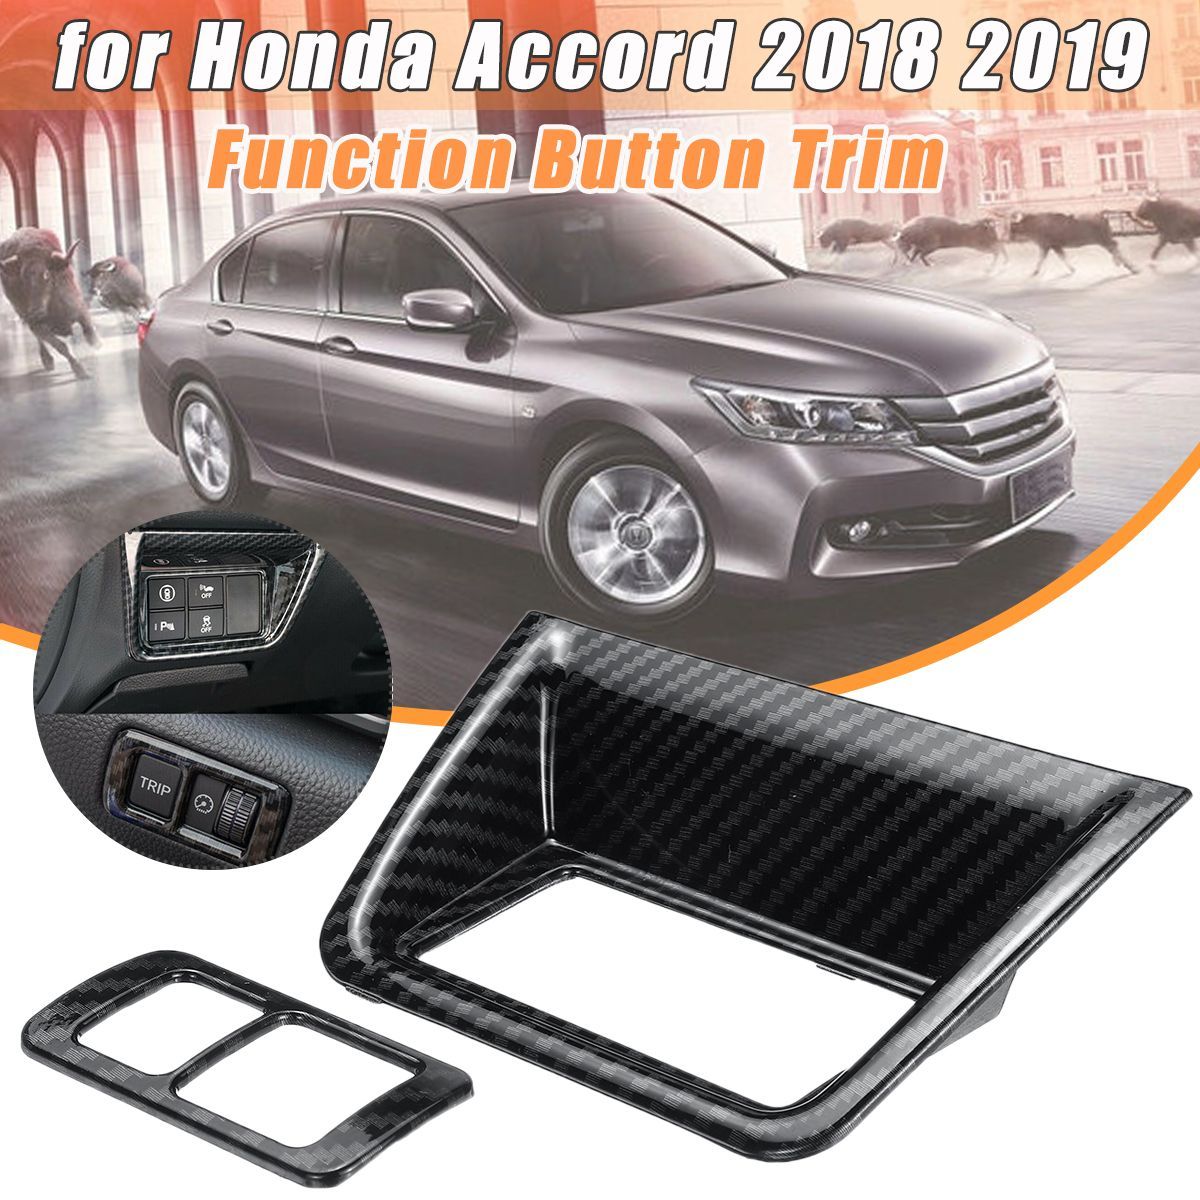 2Pcs-Car-Carbon-Fiber-Function-Button-Cover-Trim-Decor-For-Honda-Accord-2018-2019-NZ-1610189